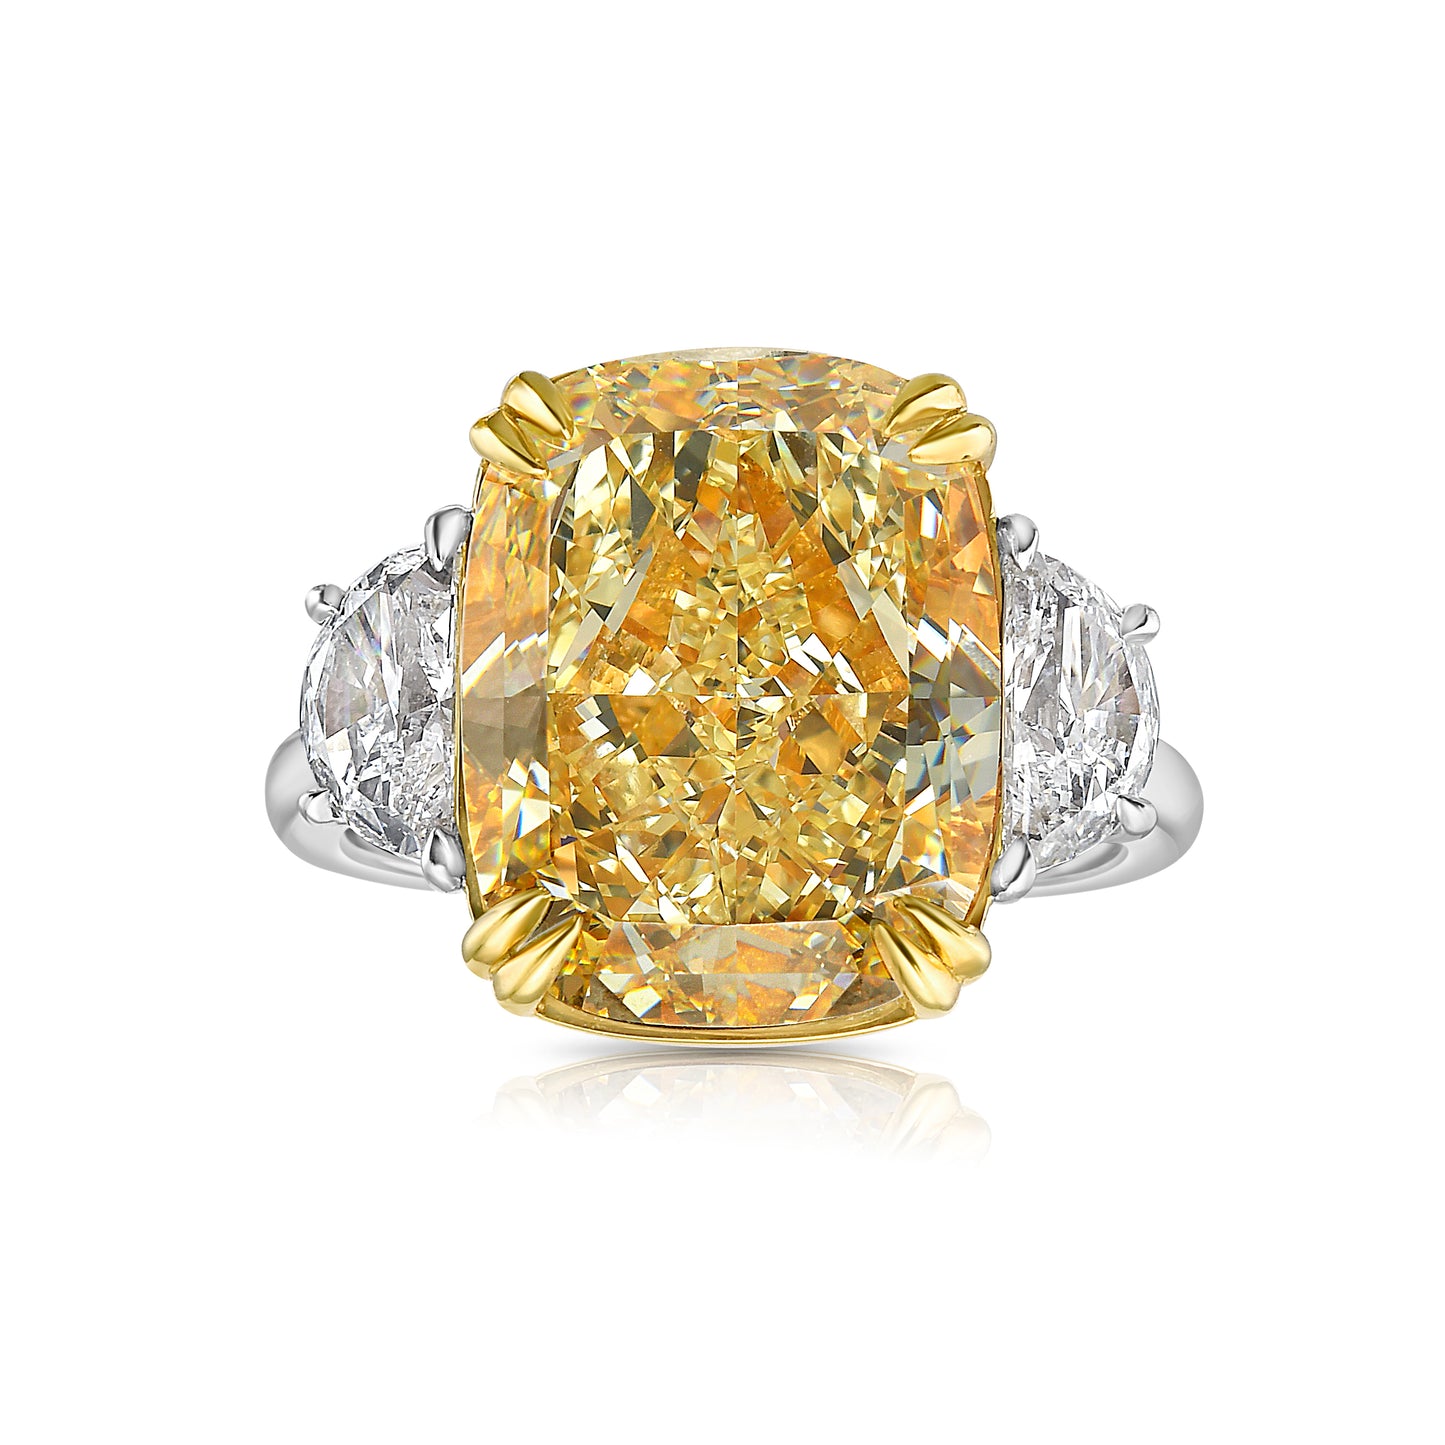 10 carat fancy light yellow diamond cushion cut three stone ring with half moons